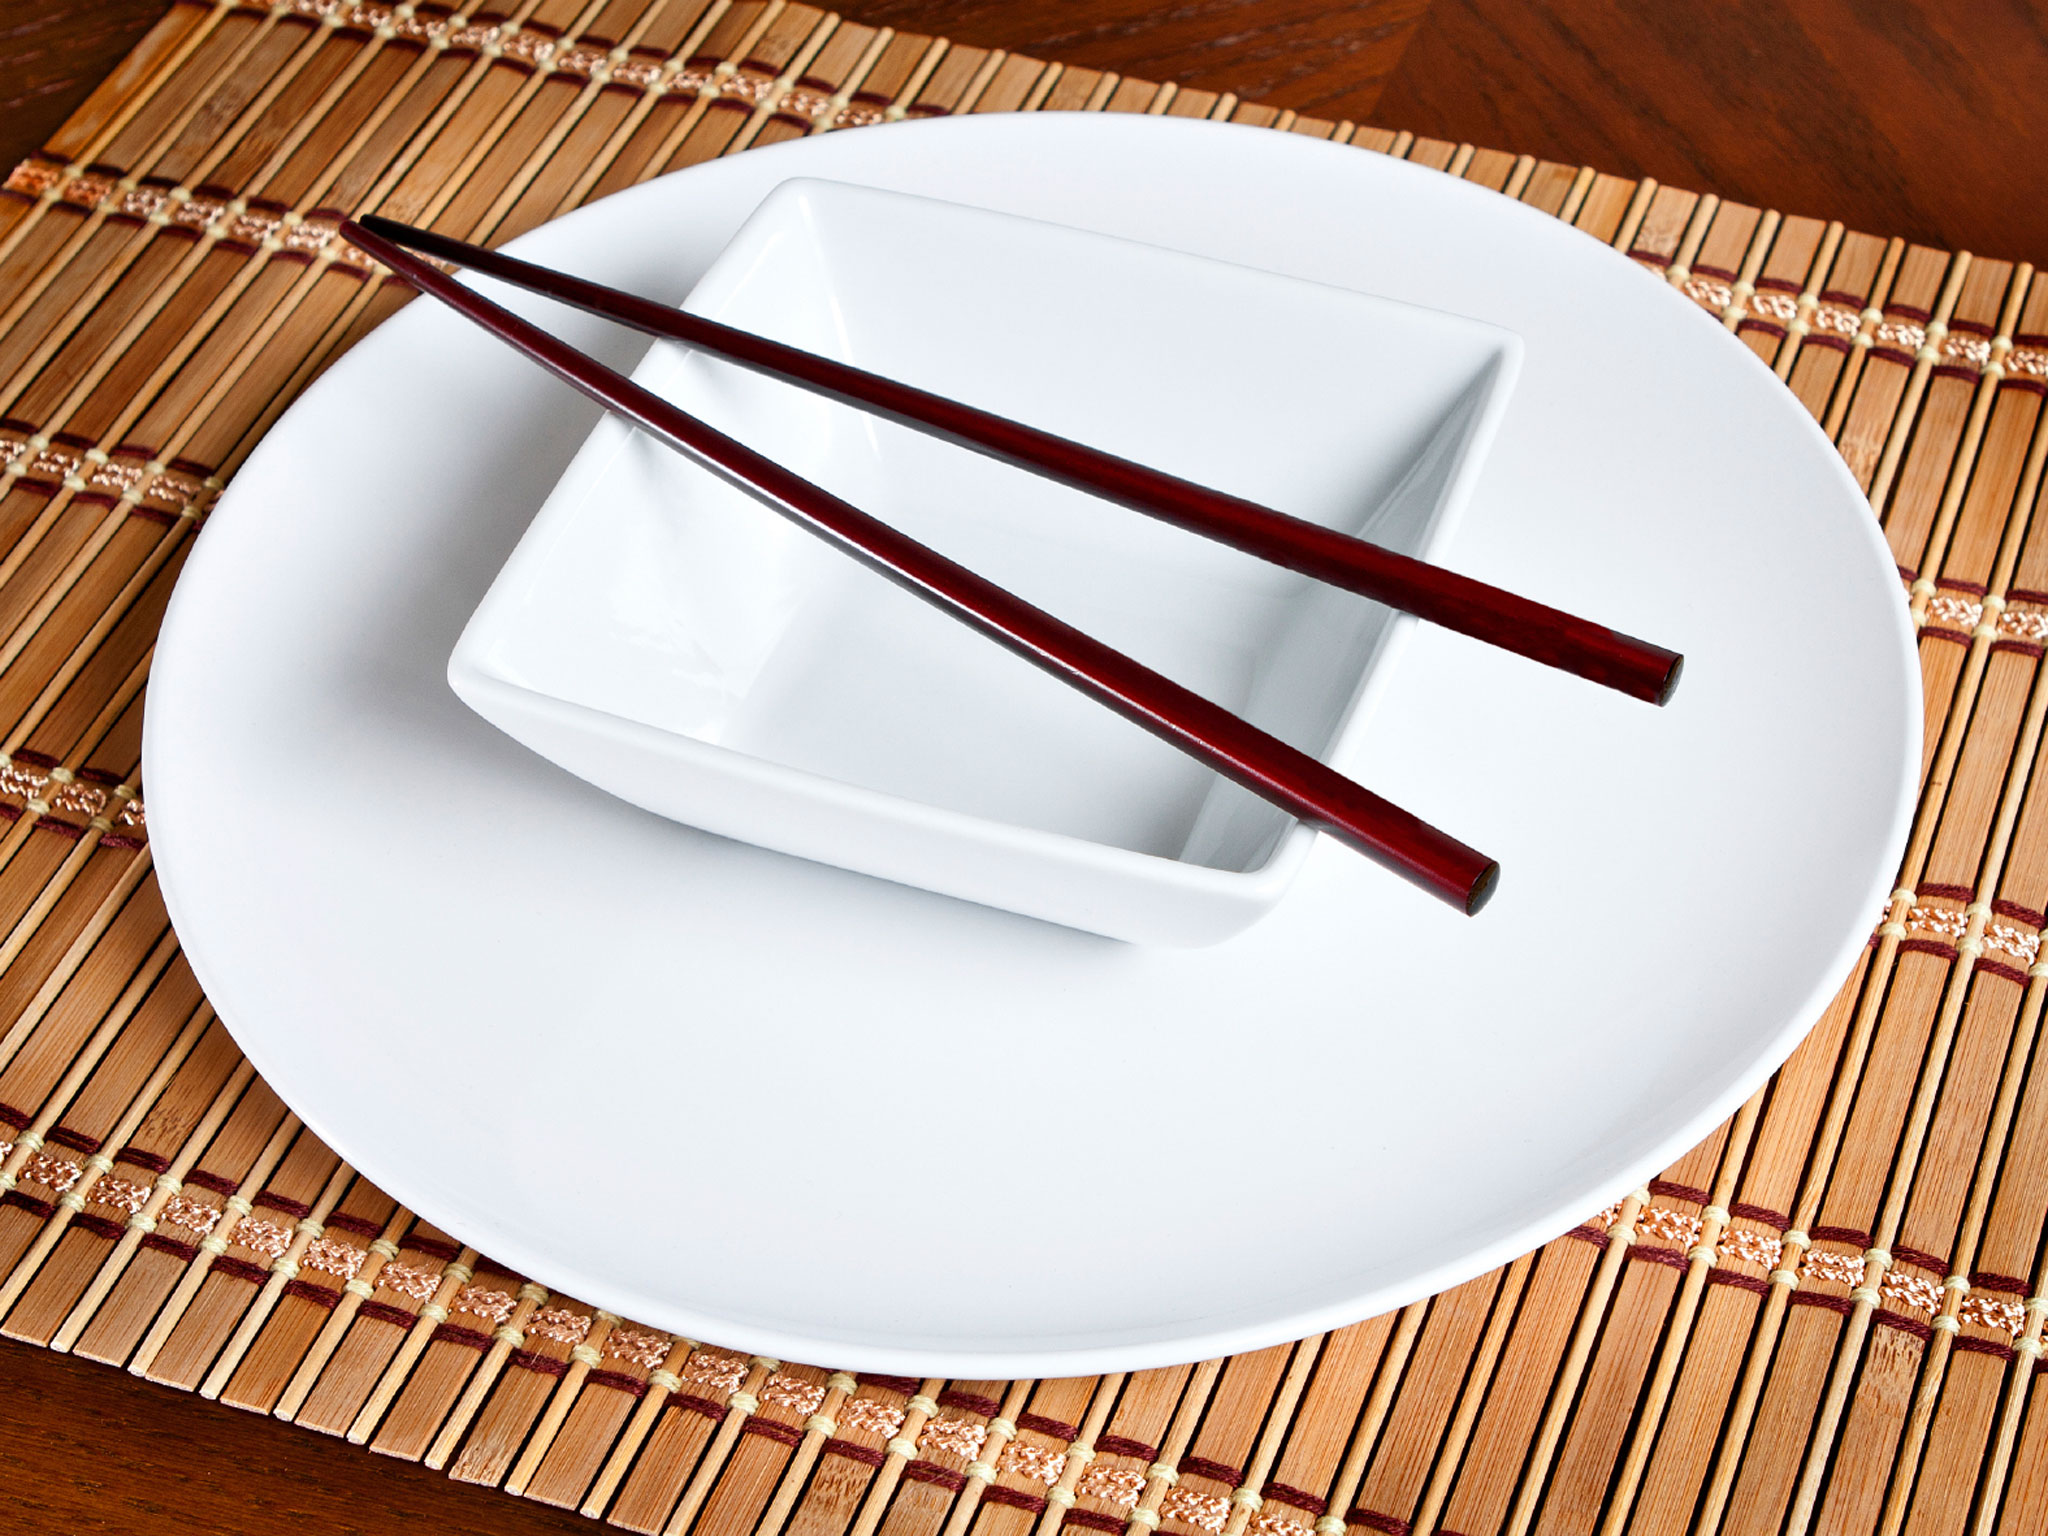 history of chopsticks in japan